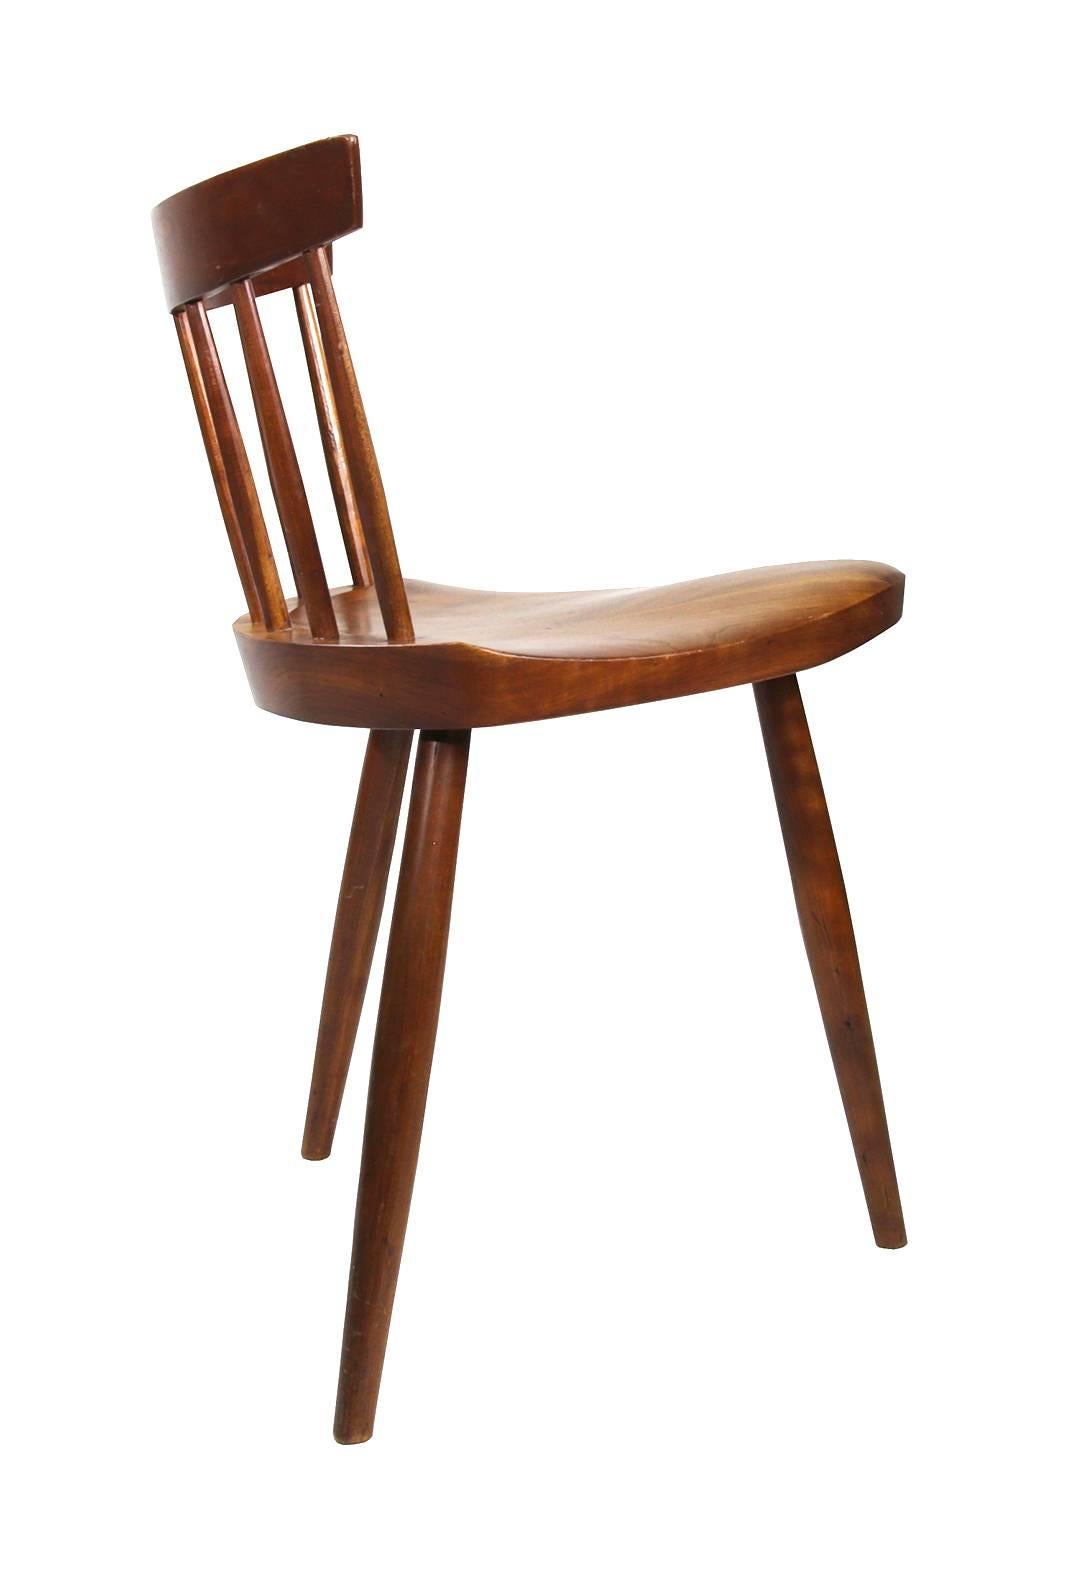 Organic Modern  Early George Nakashima Studio Mira Chair